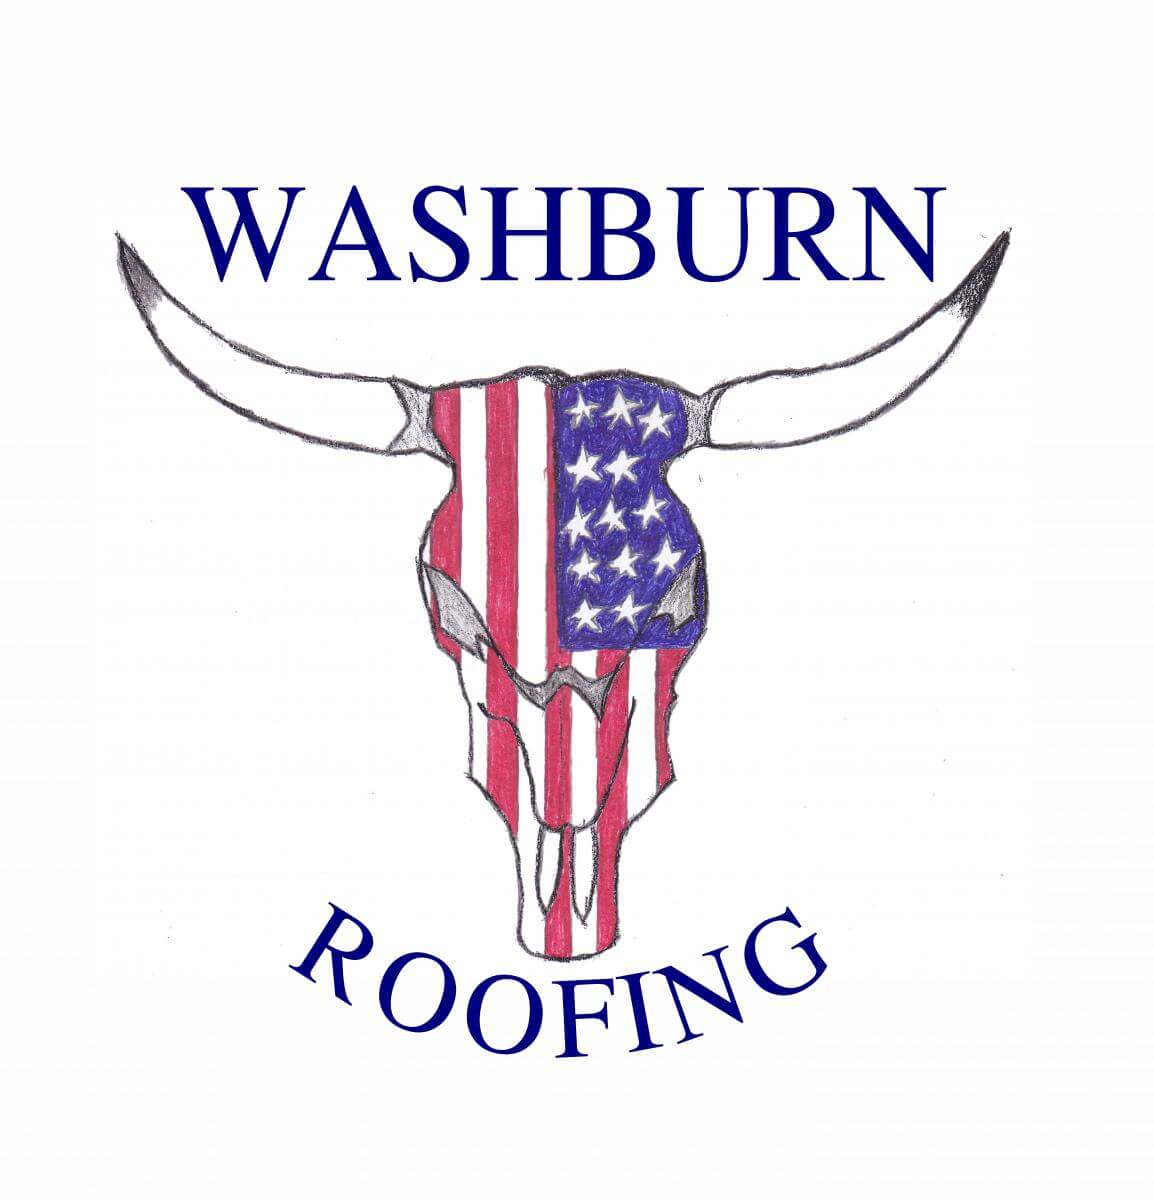 Washburn Roofing